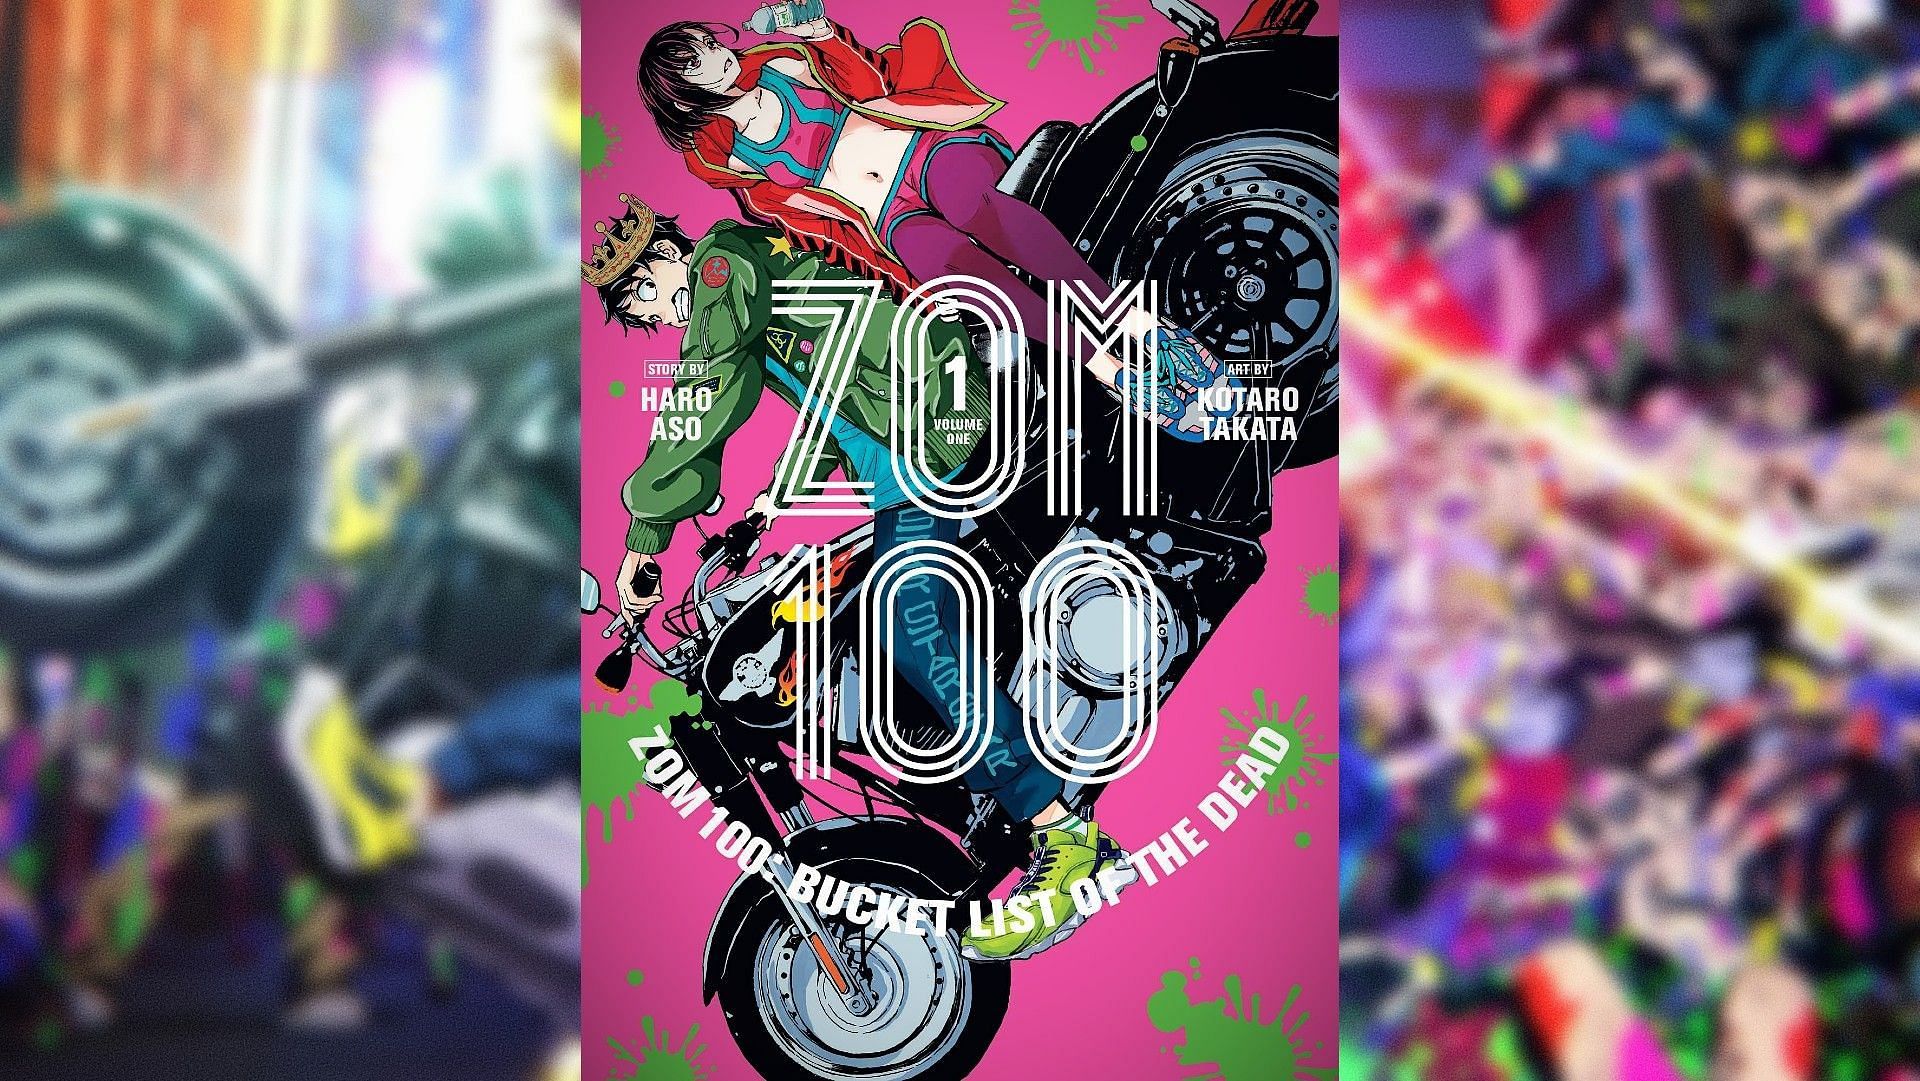 Zom 100: Bucket List of the Dead manga cover (Image via Shogakukan)